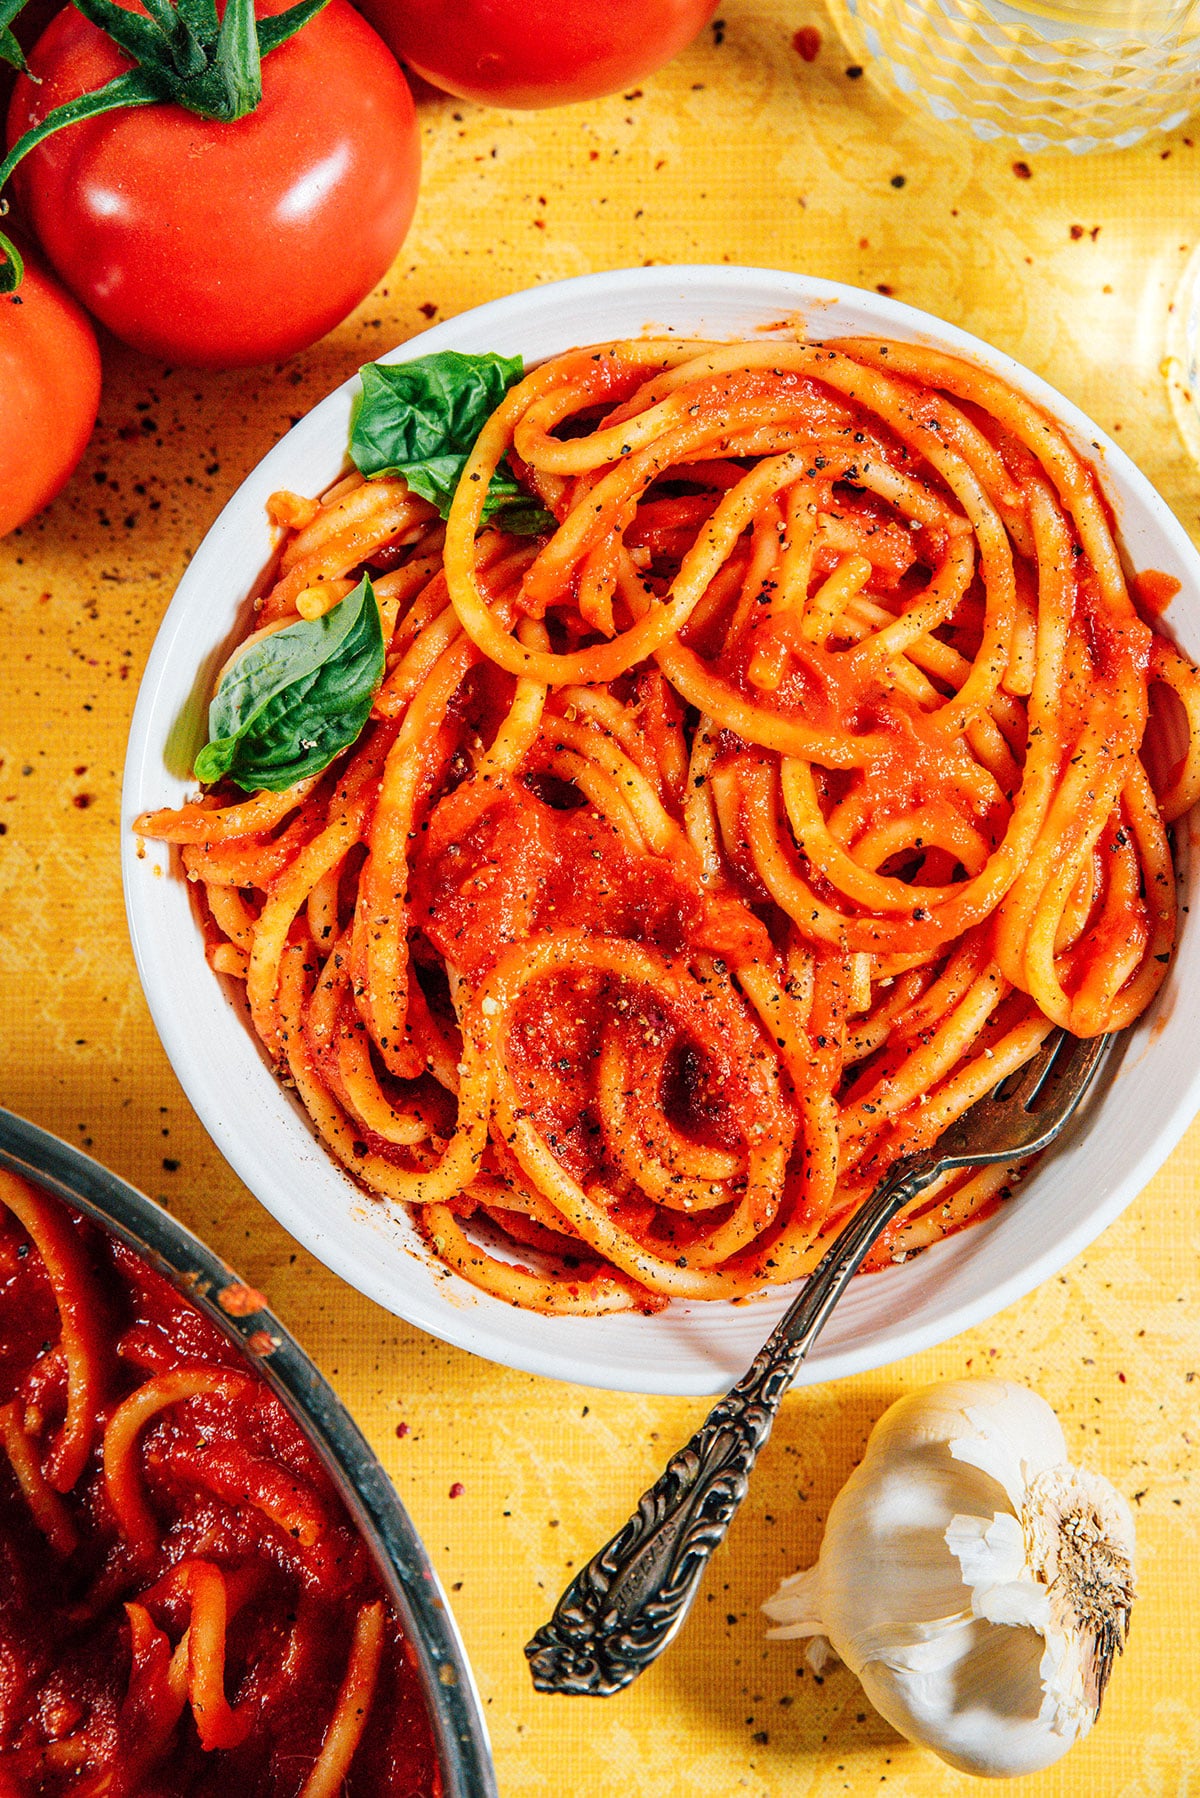 Tomato sauce with spaghetti noodles.